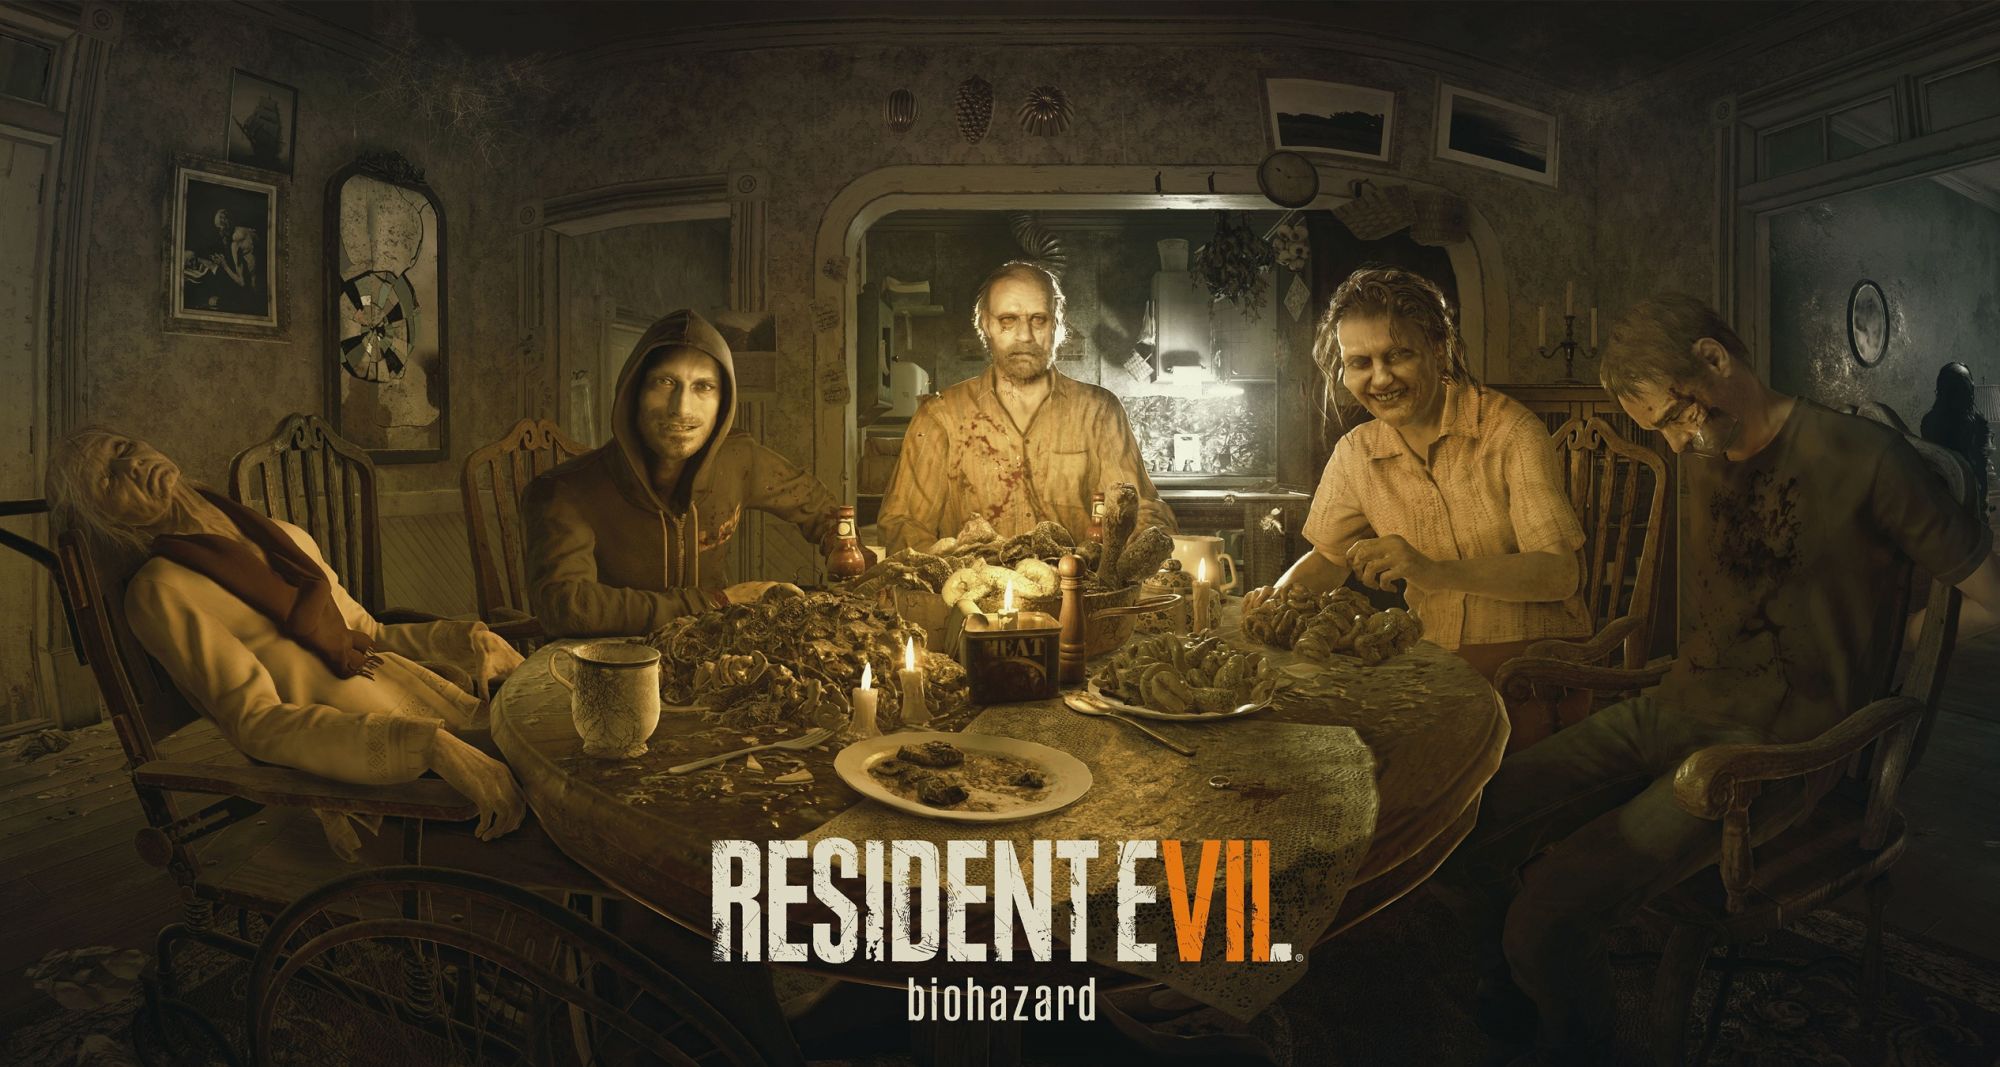 Resident Evil VII biohazard